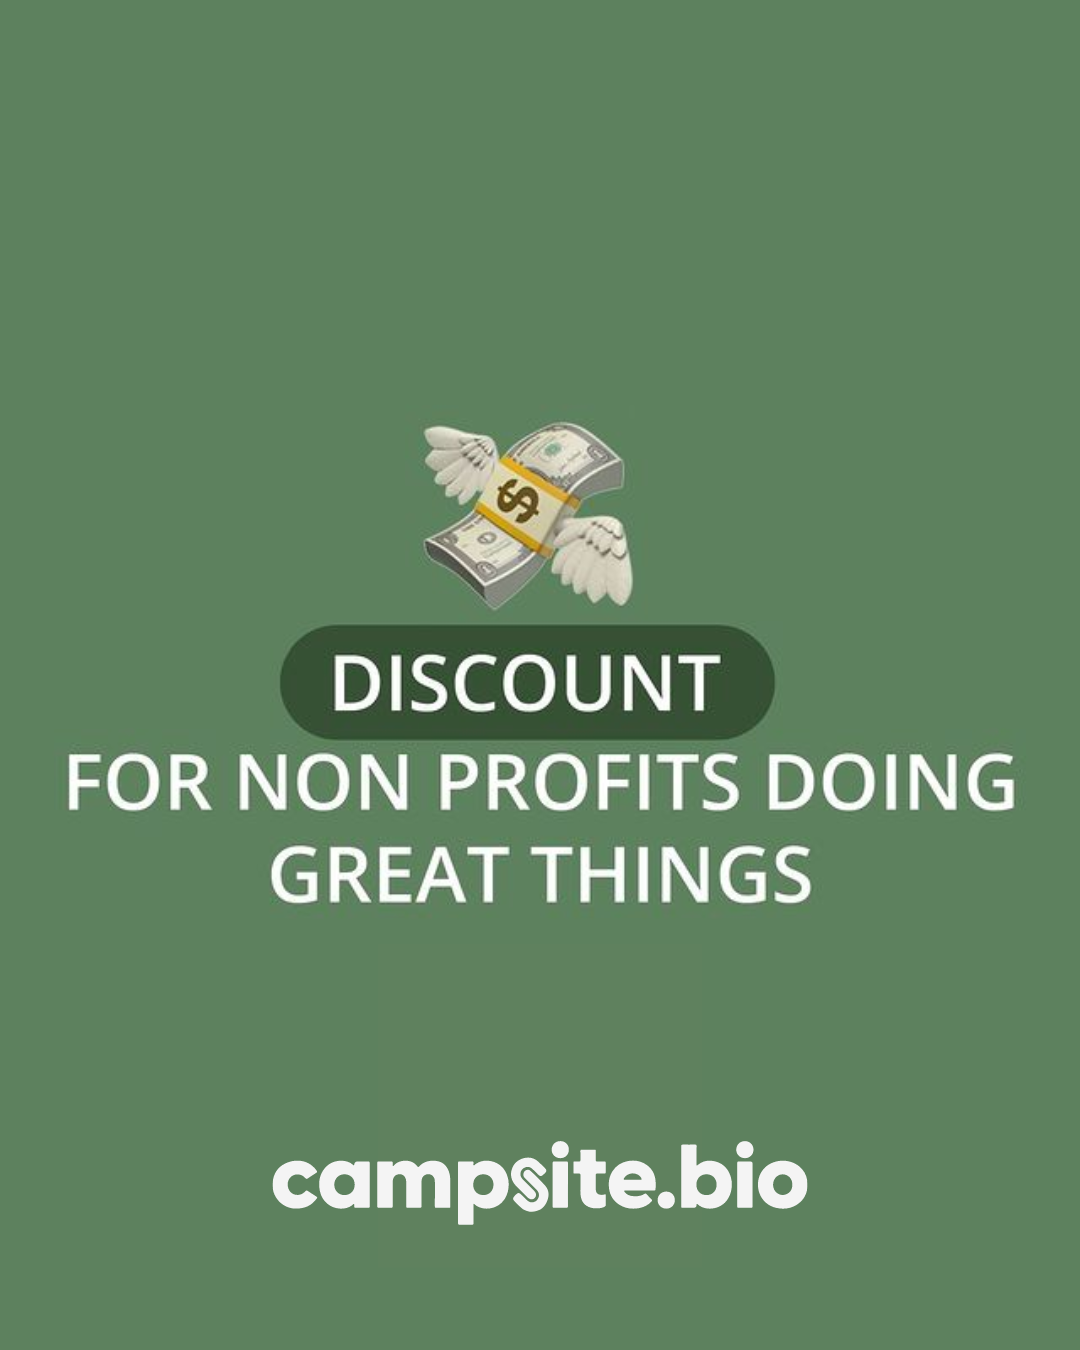 Campsite.bio non-profit discount